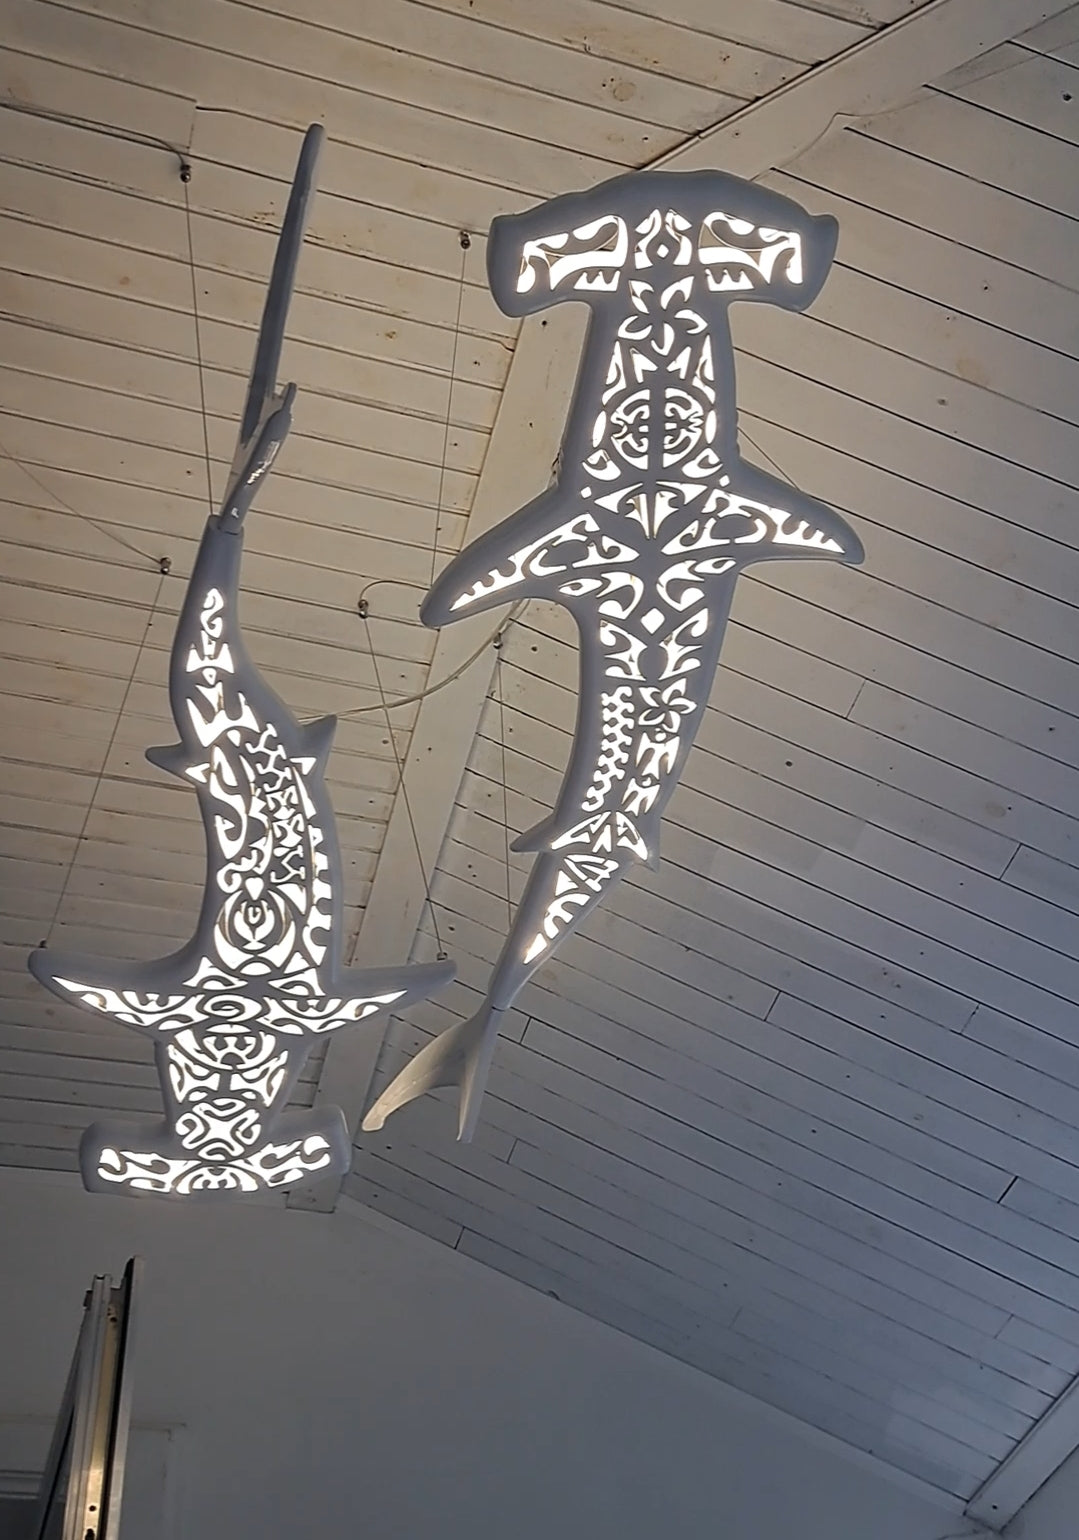 Handmade wood ceiling chandelier with 2 hammerhead sharks: LED wall light for beach coastal or nautical Maori surfing style room decor